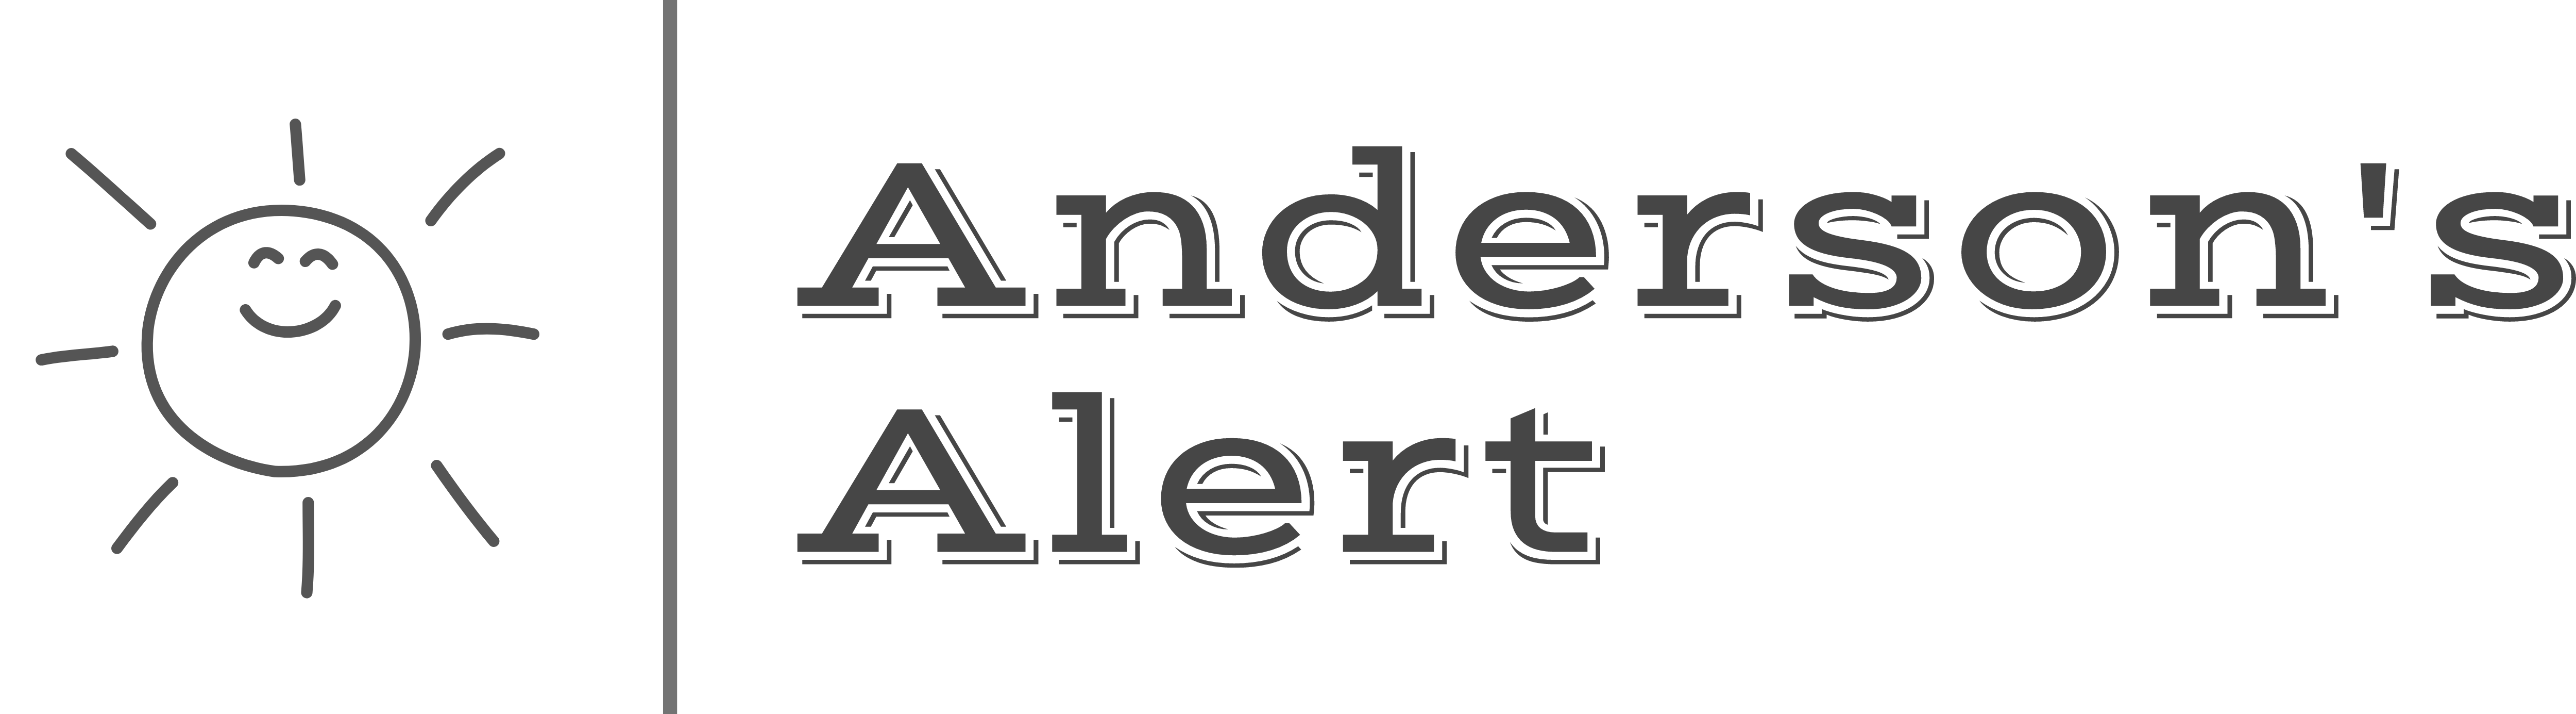 Anderson's Alert